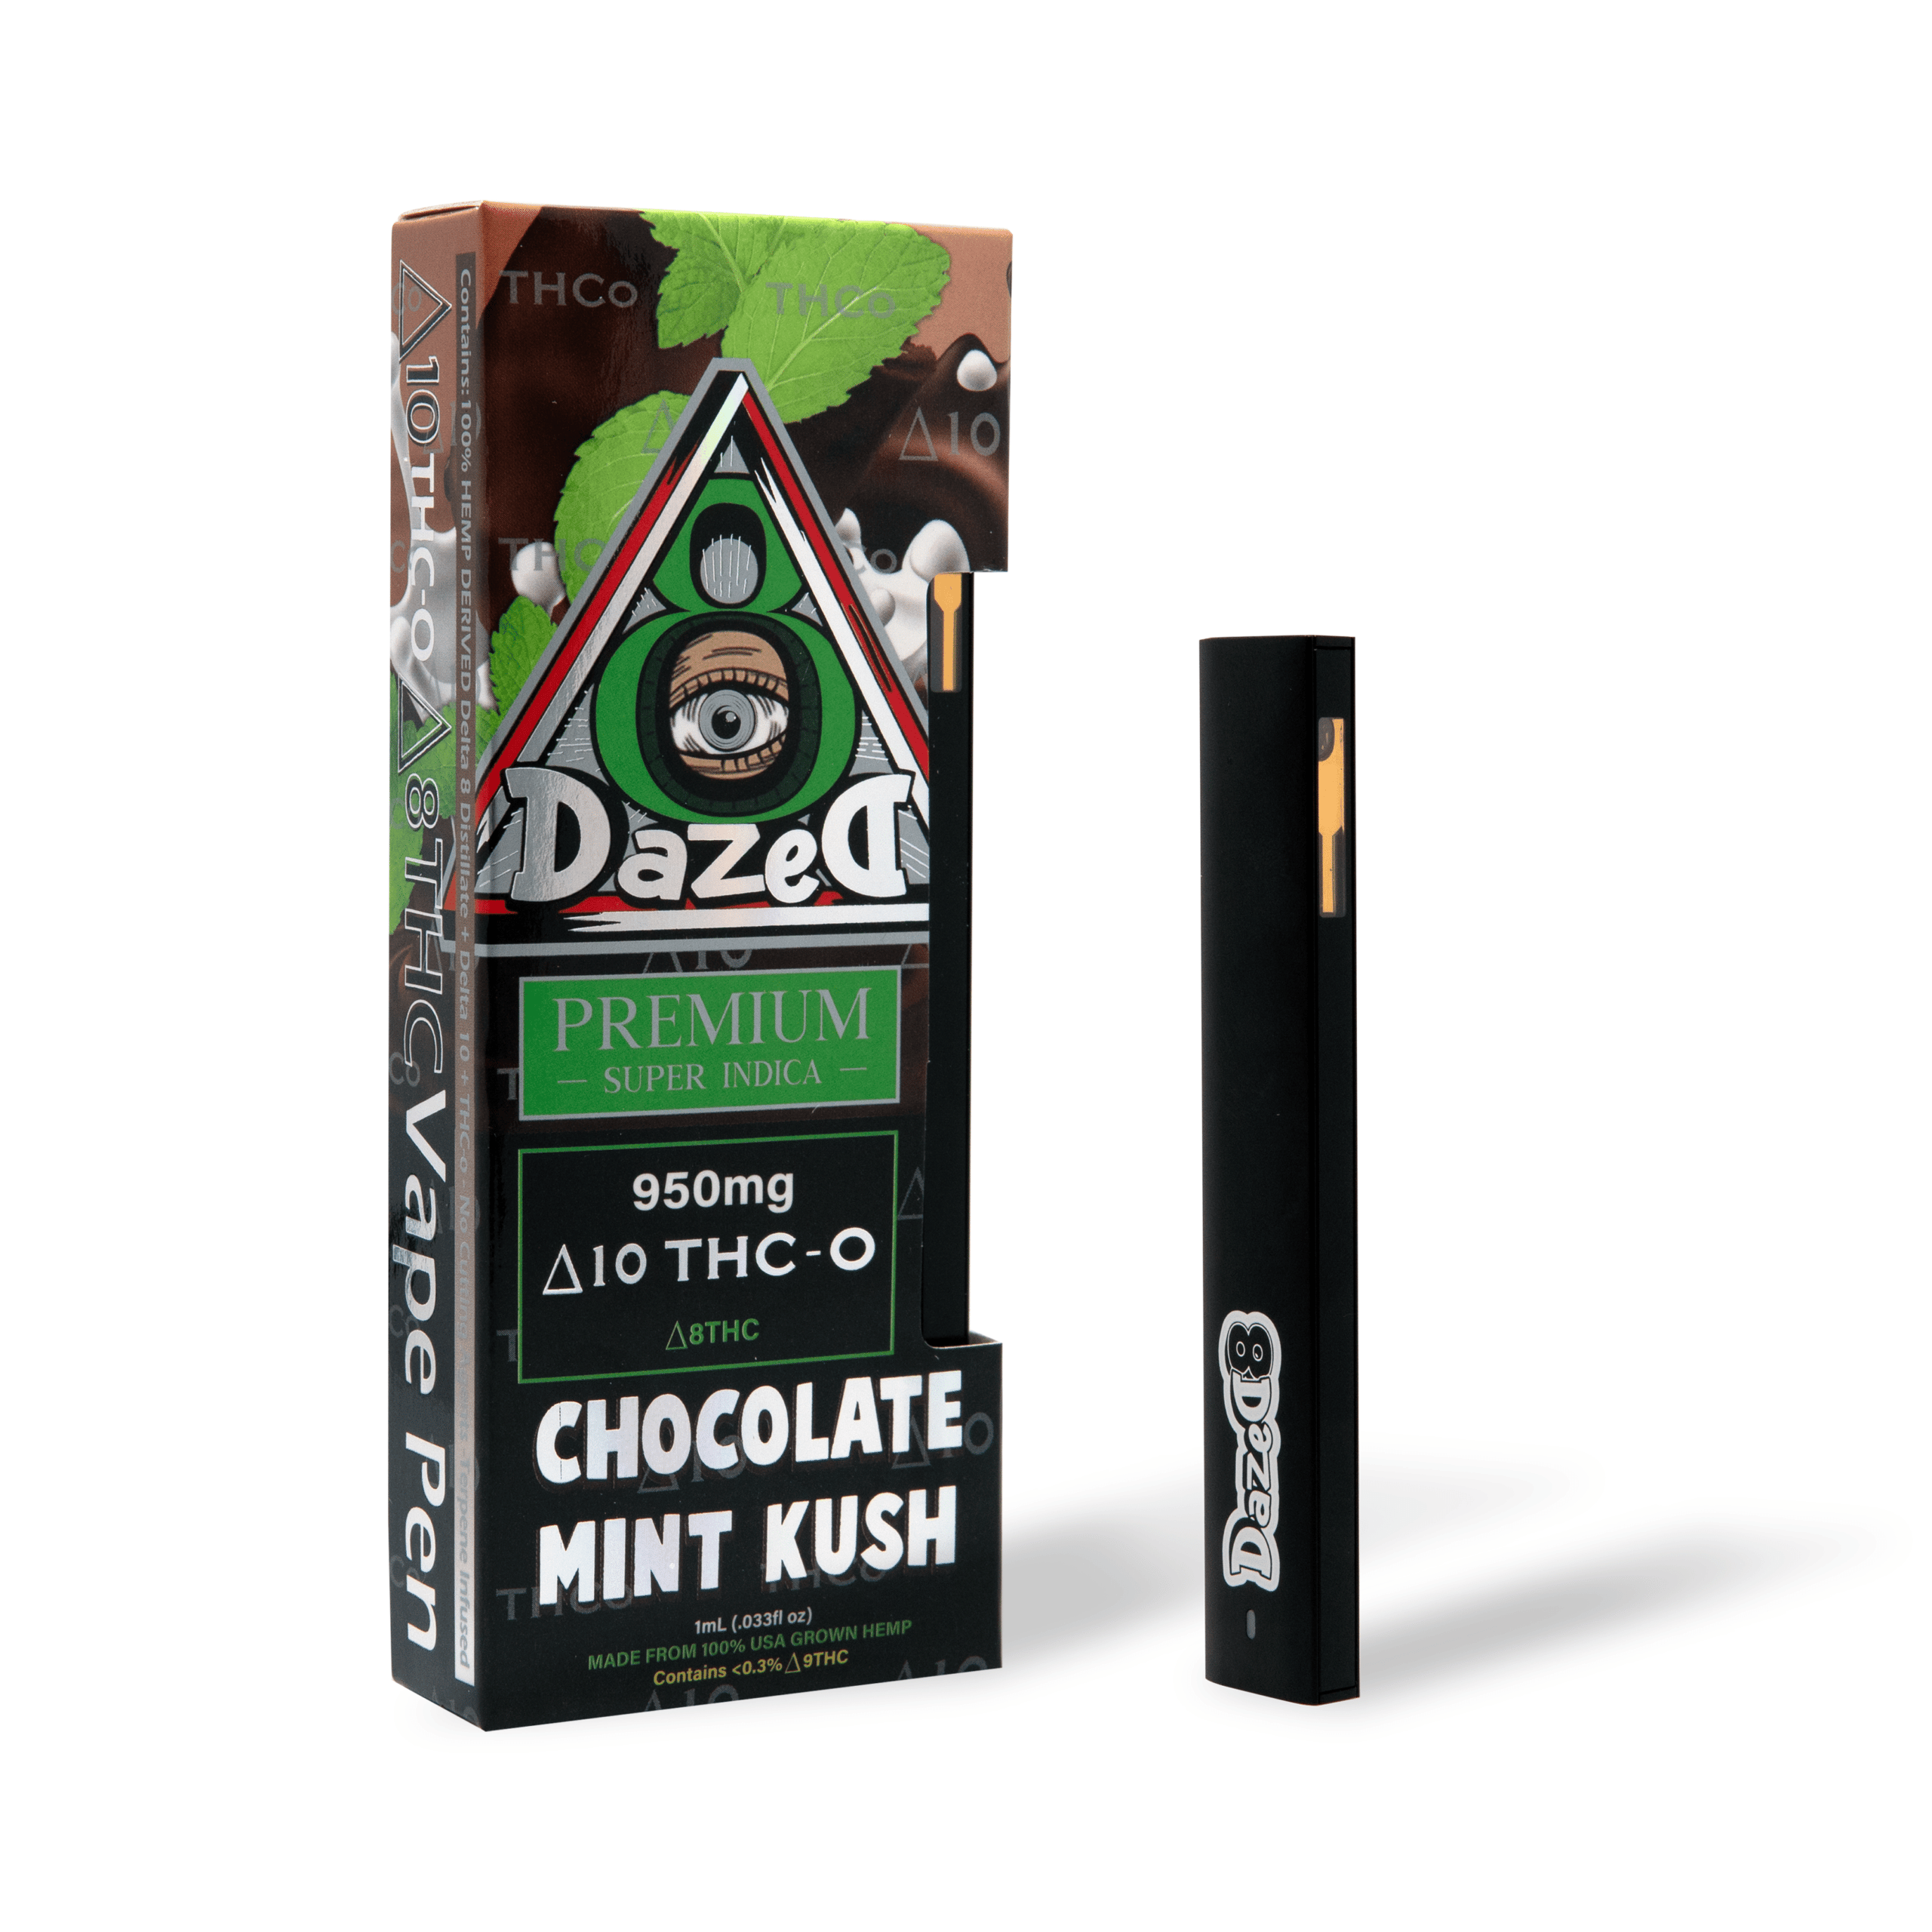 DazeD8 Chocolate Mint Kush Delta 10 THC-O Disposable (1g) Best Price